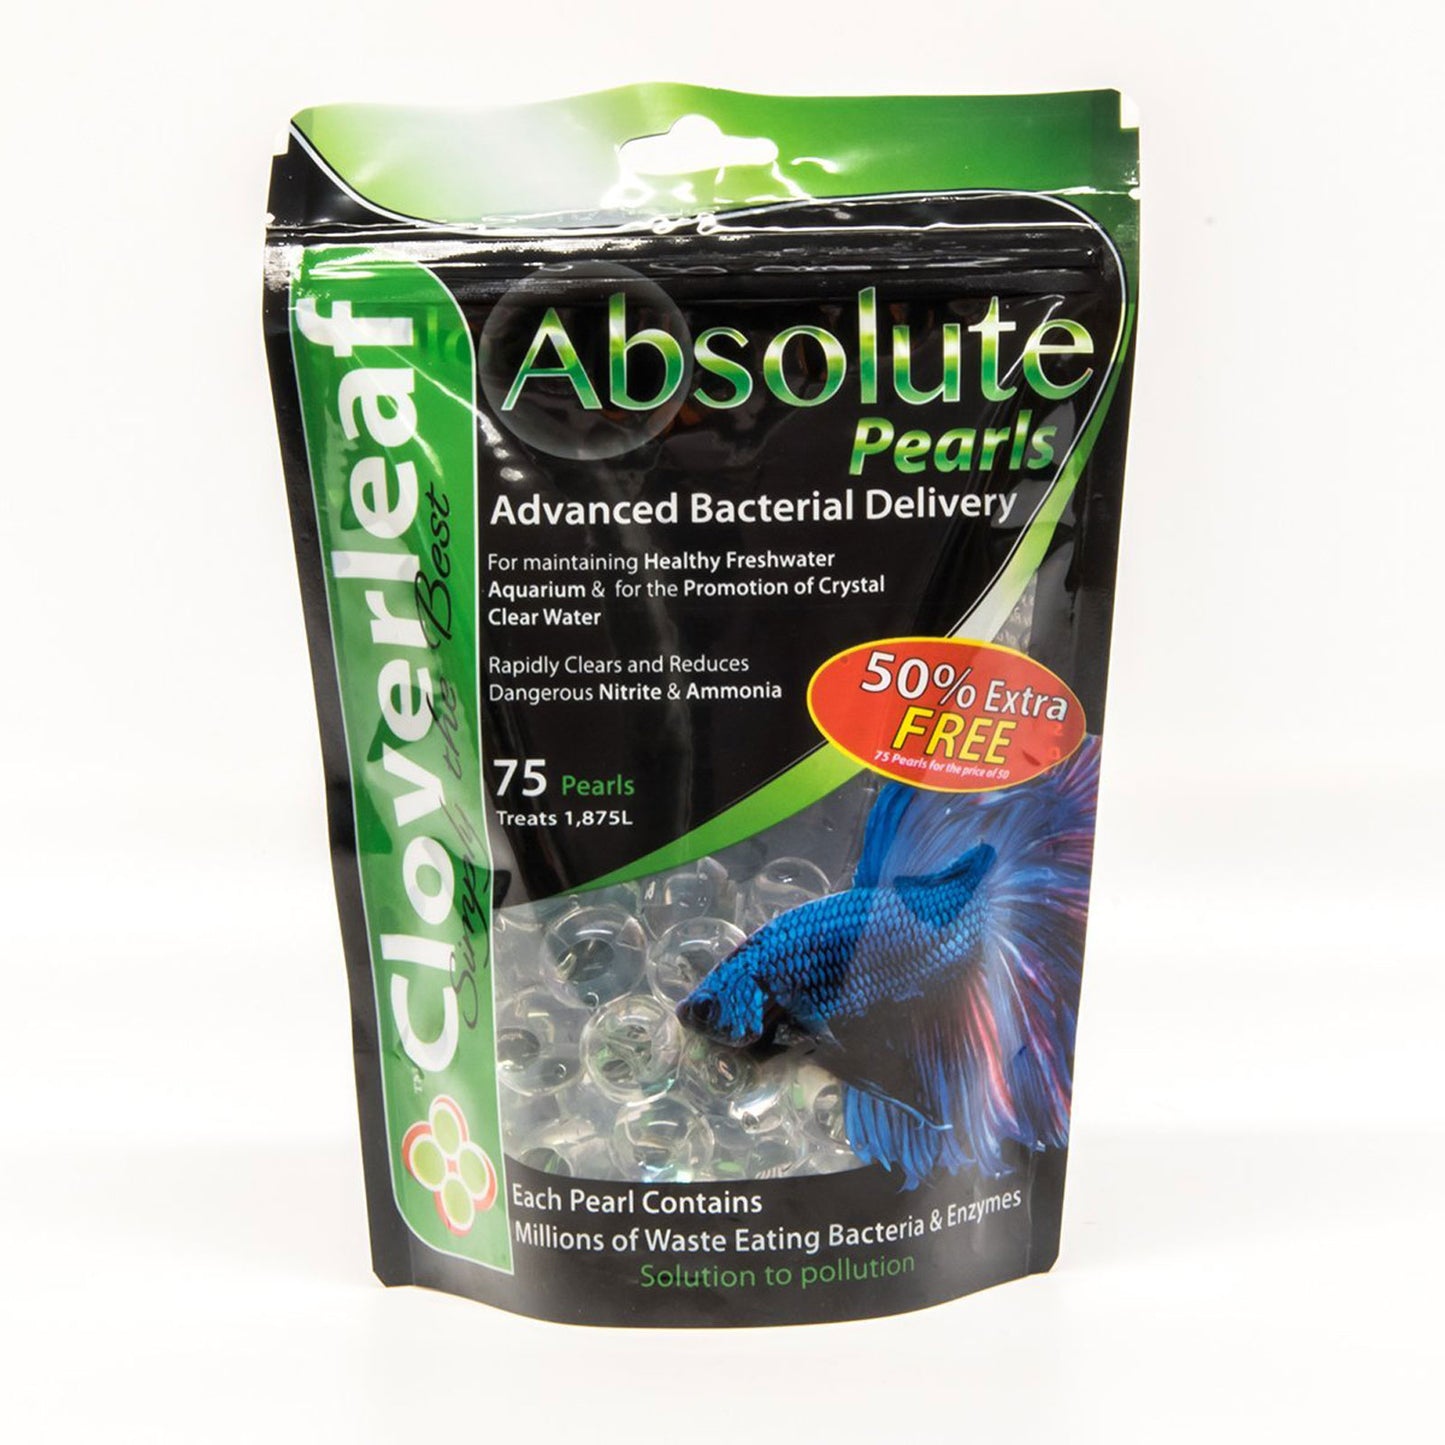 Cloverleaf Absolute Pearls Aquarium Treatment 50 Pearls + 50% FREE (75 Pearls)